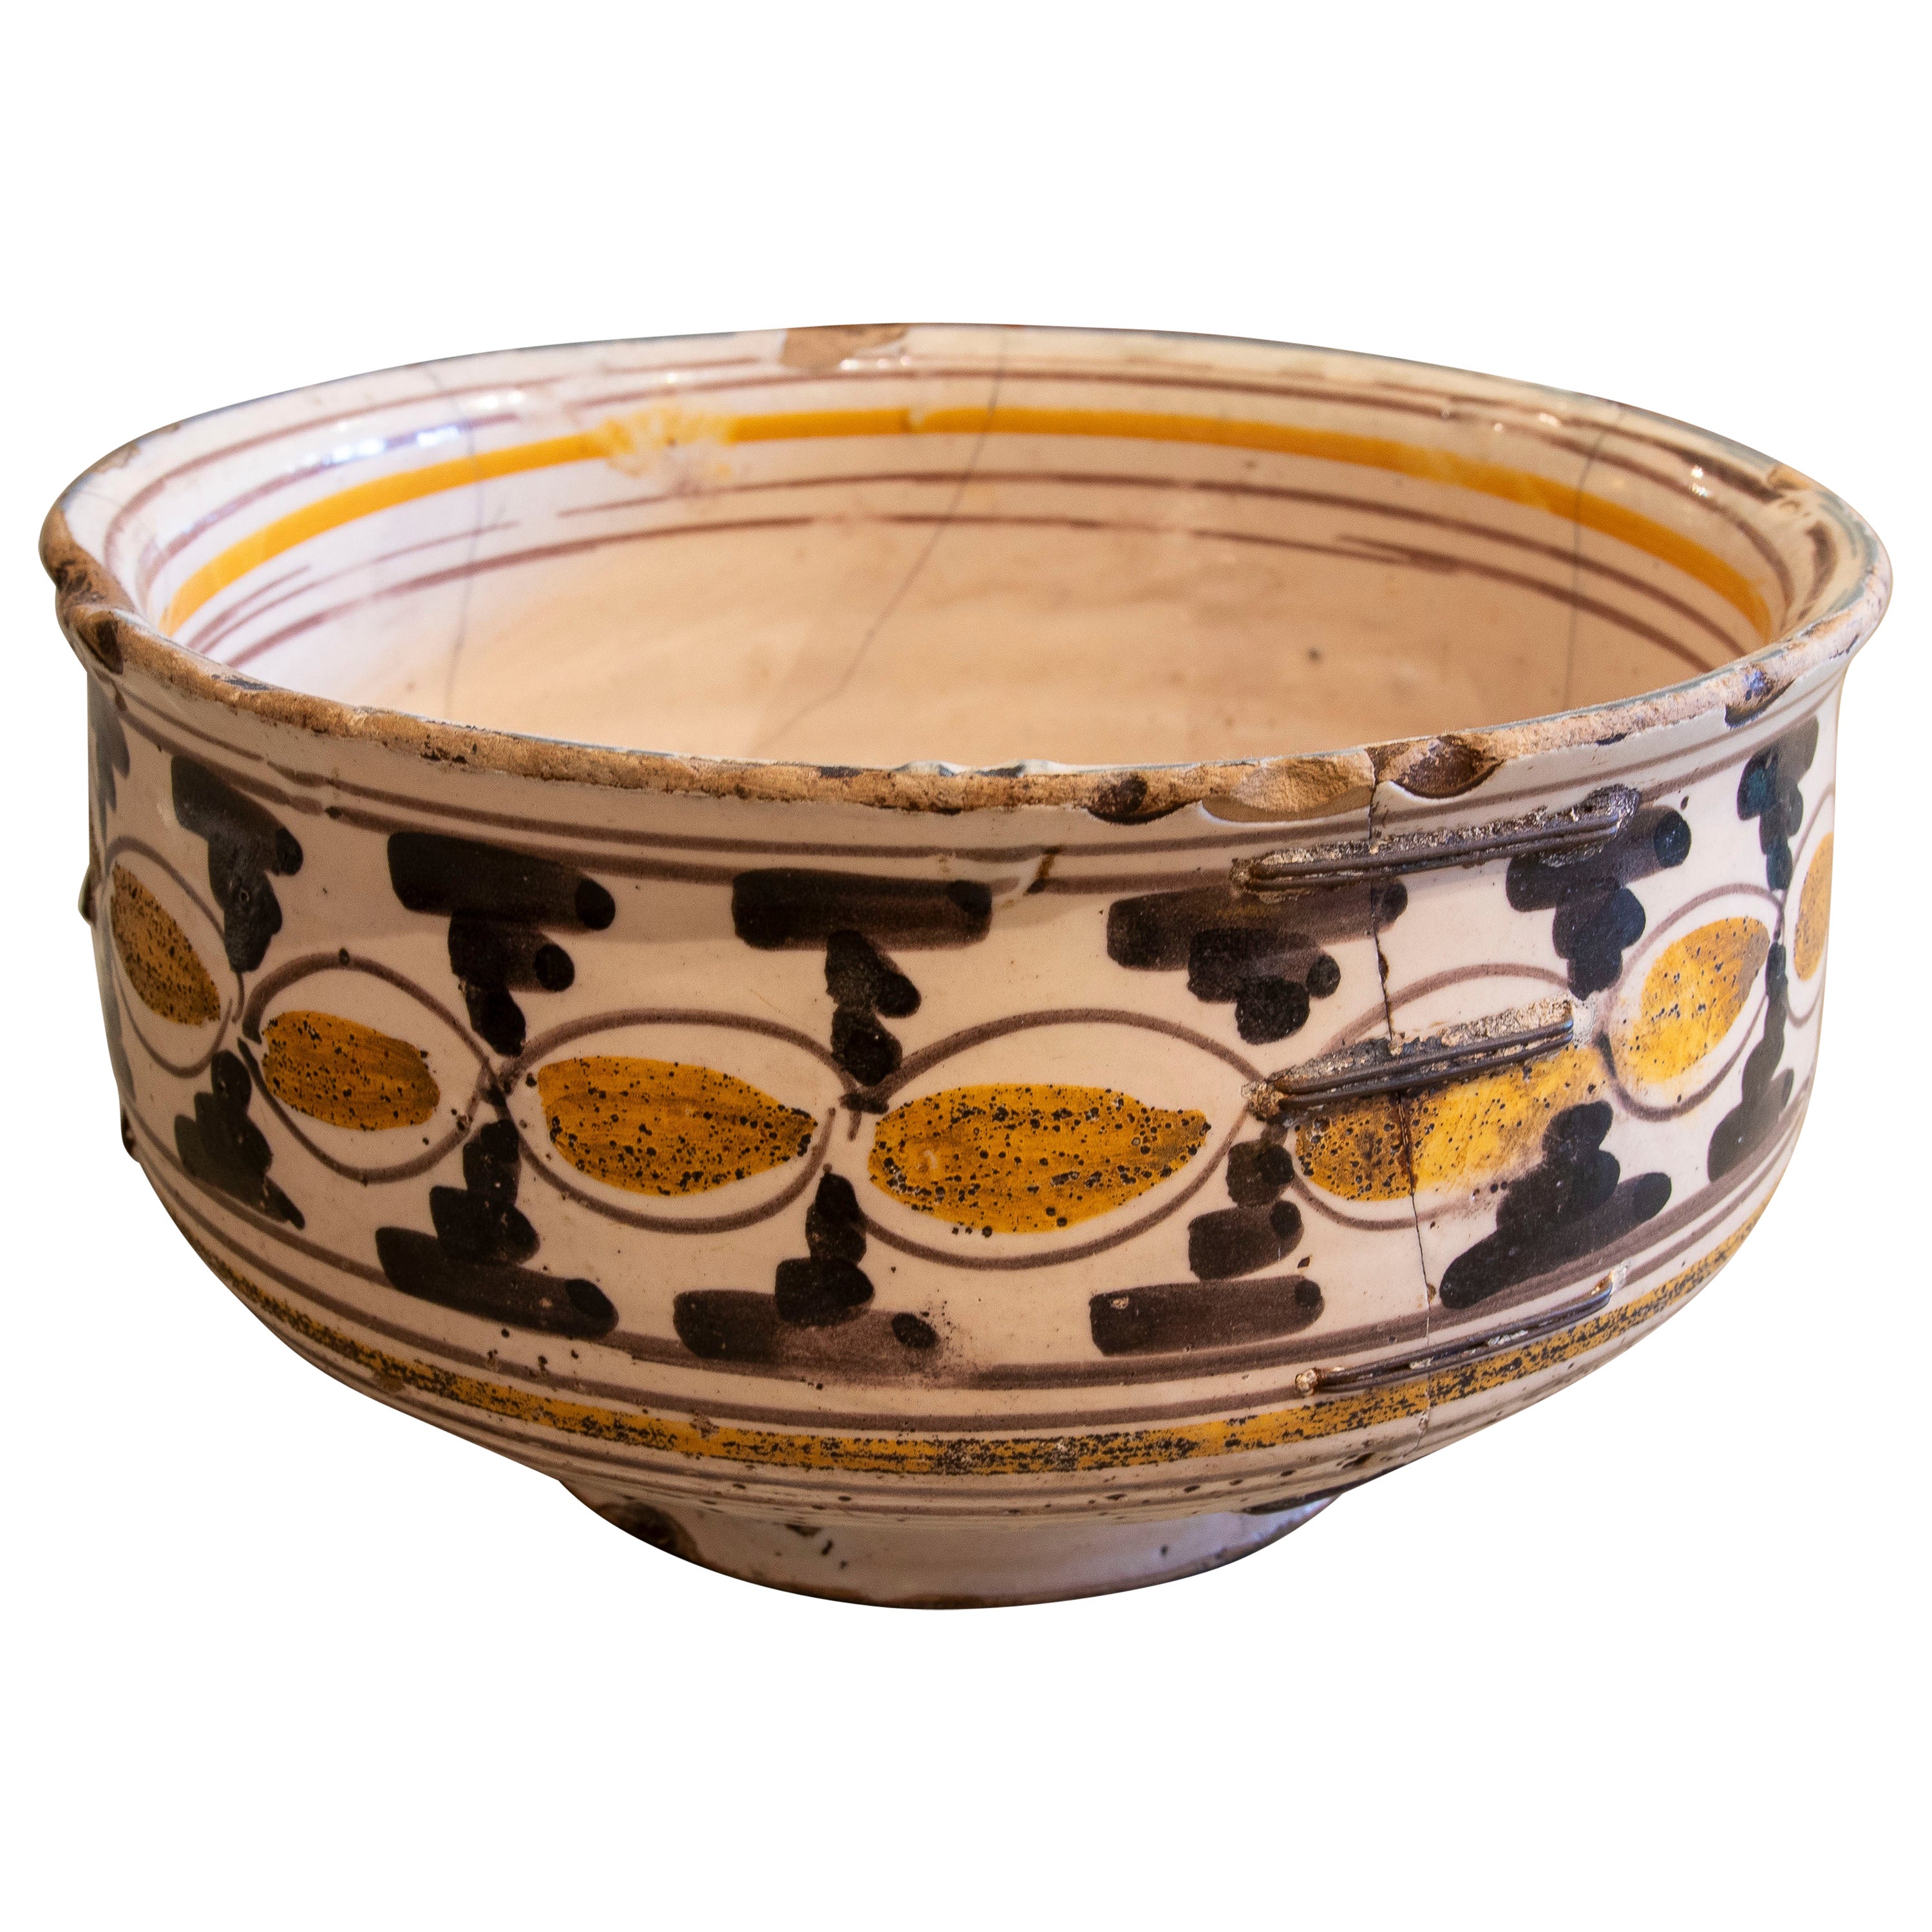 19th Century Spanish Hand-Painted Ceramic Bowl with Iron Reeds